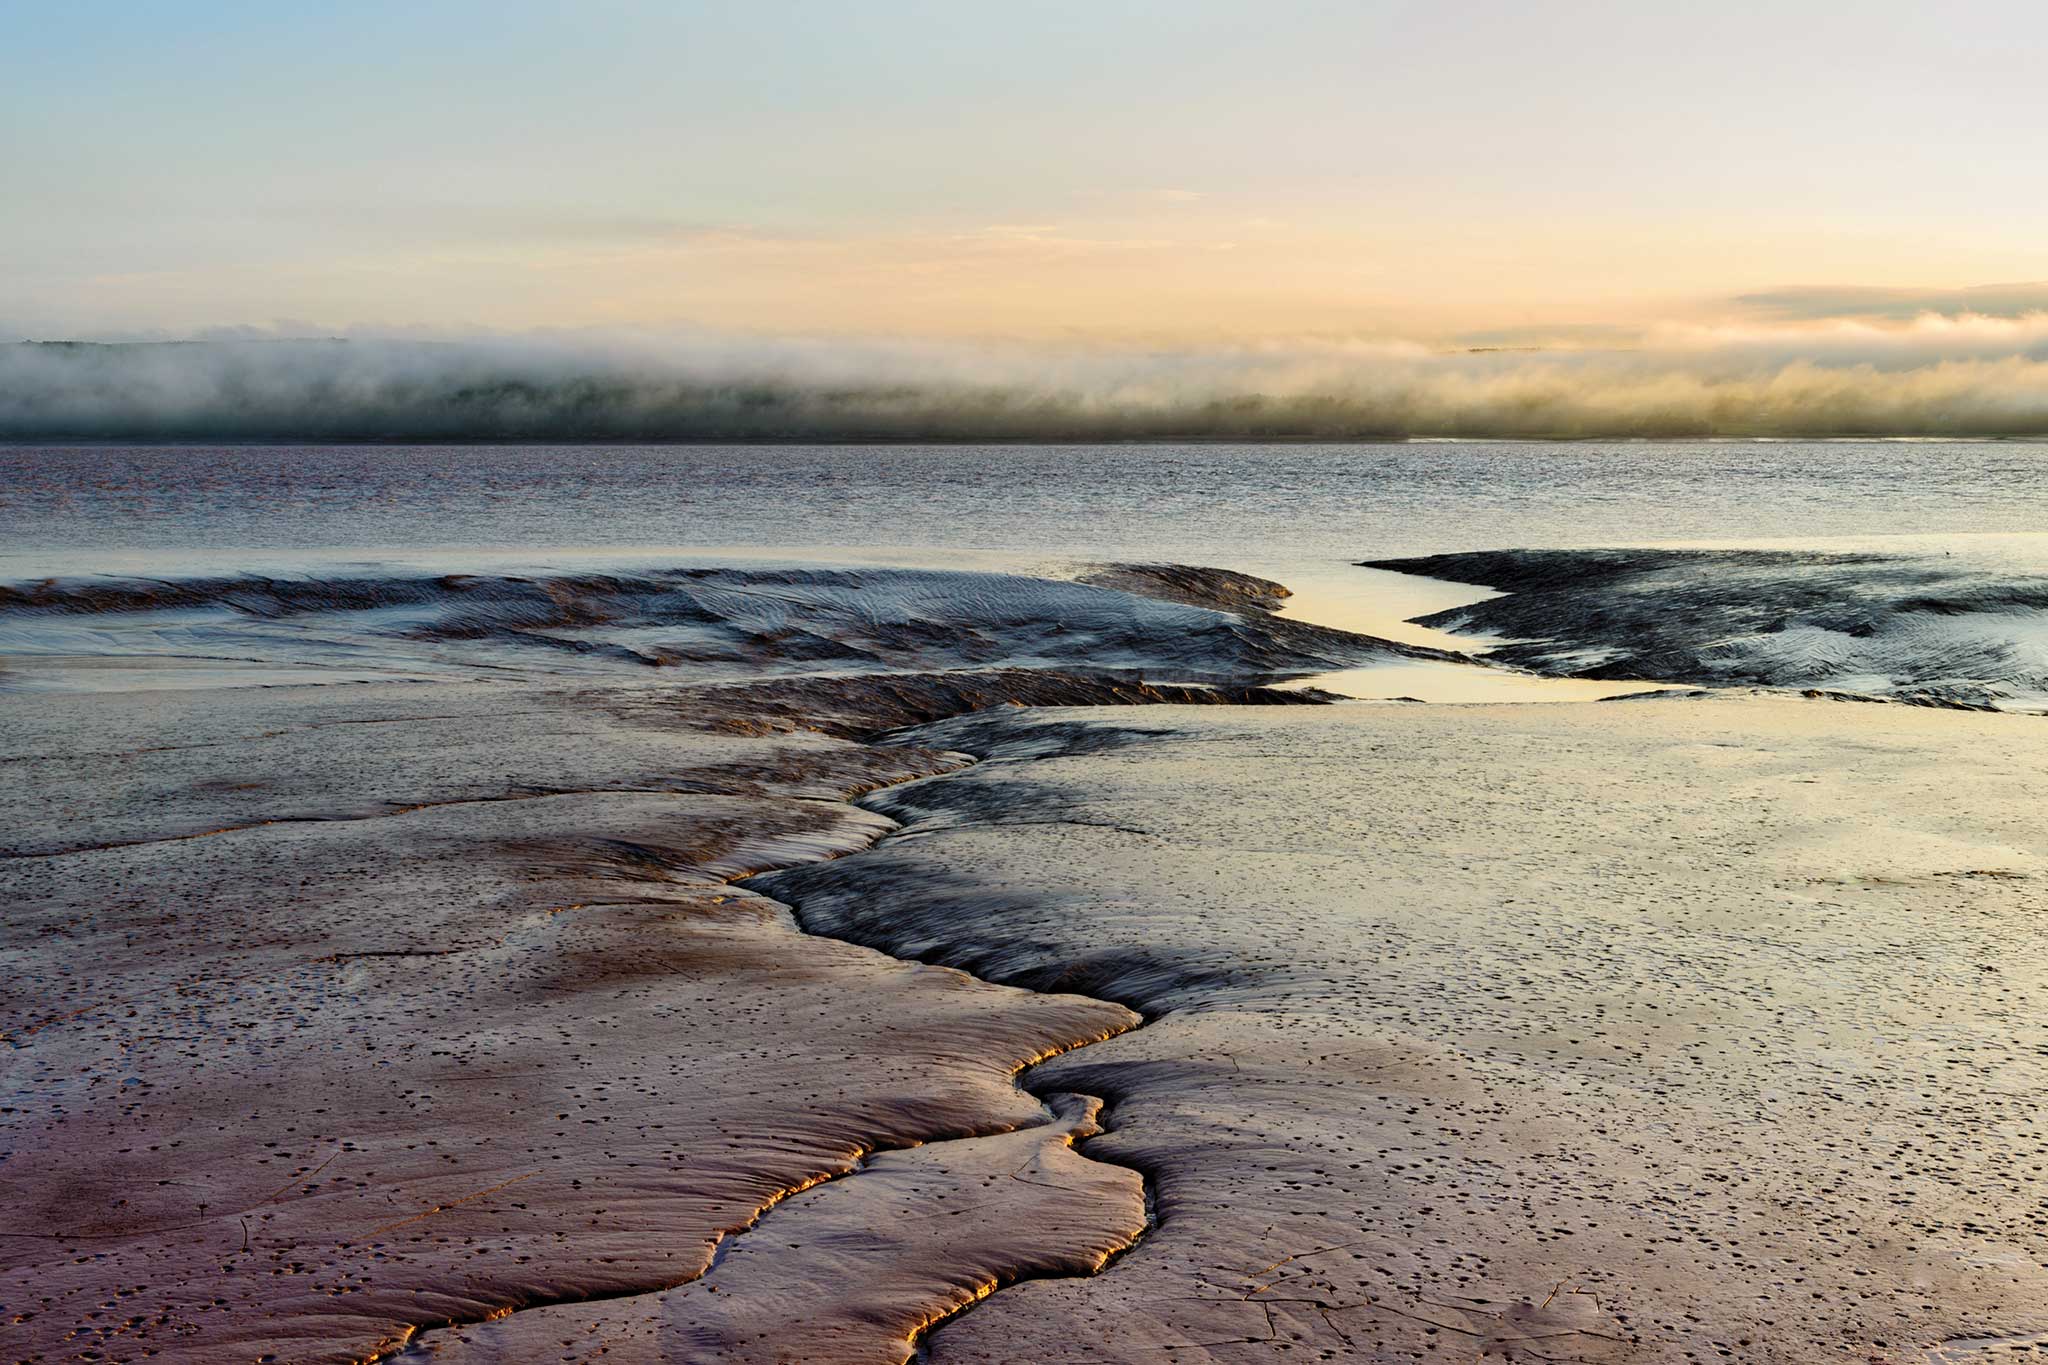 Petitcodiac River at low tide - photo by Charles LeGresley